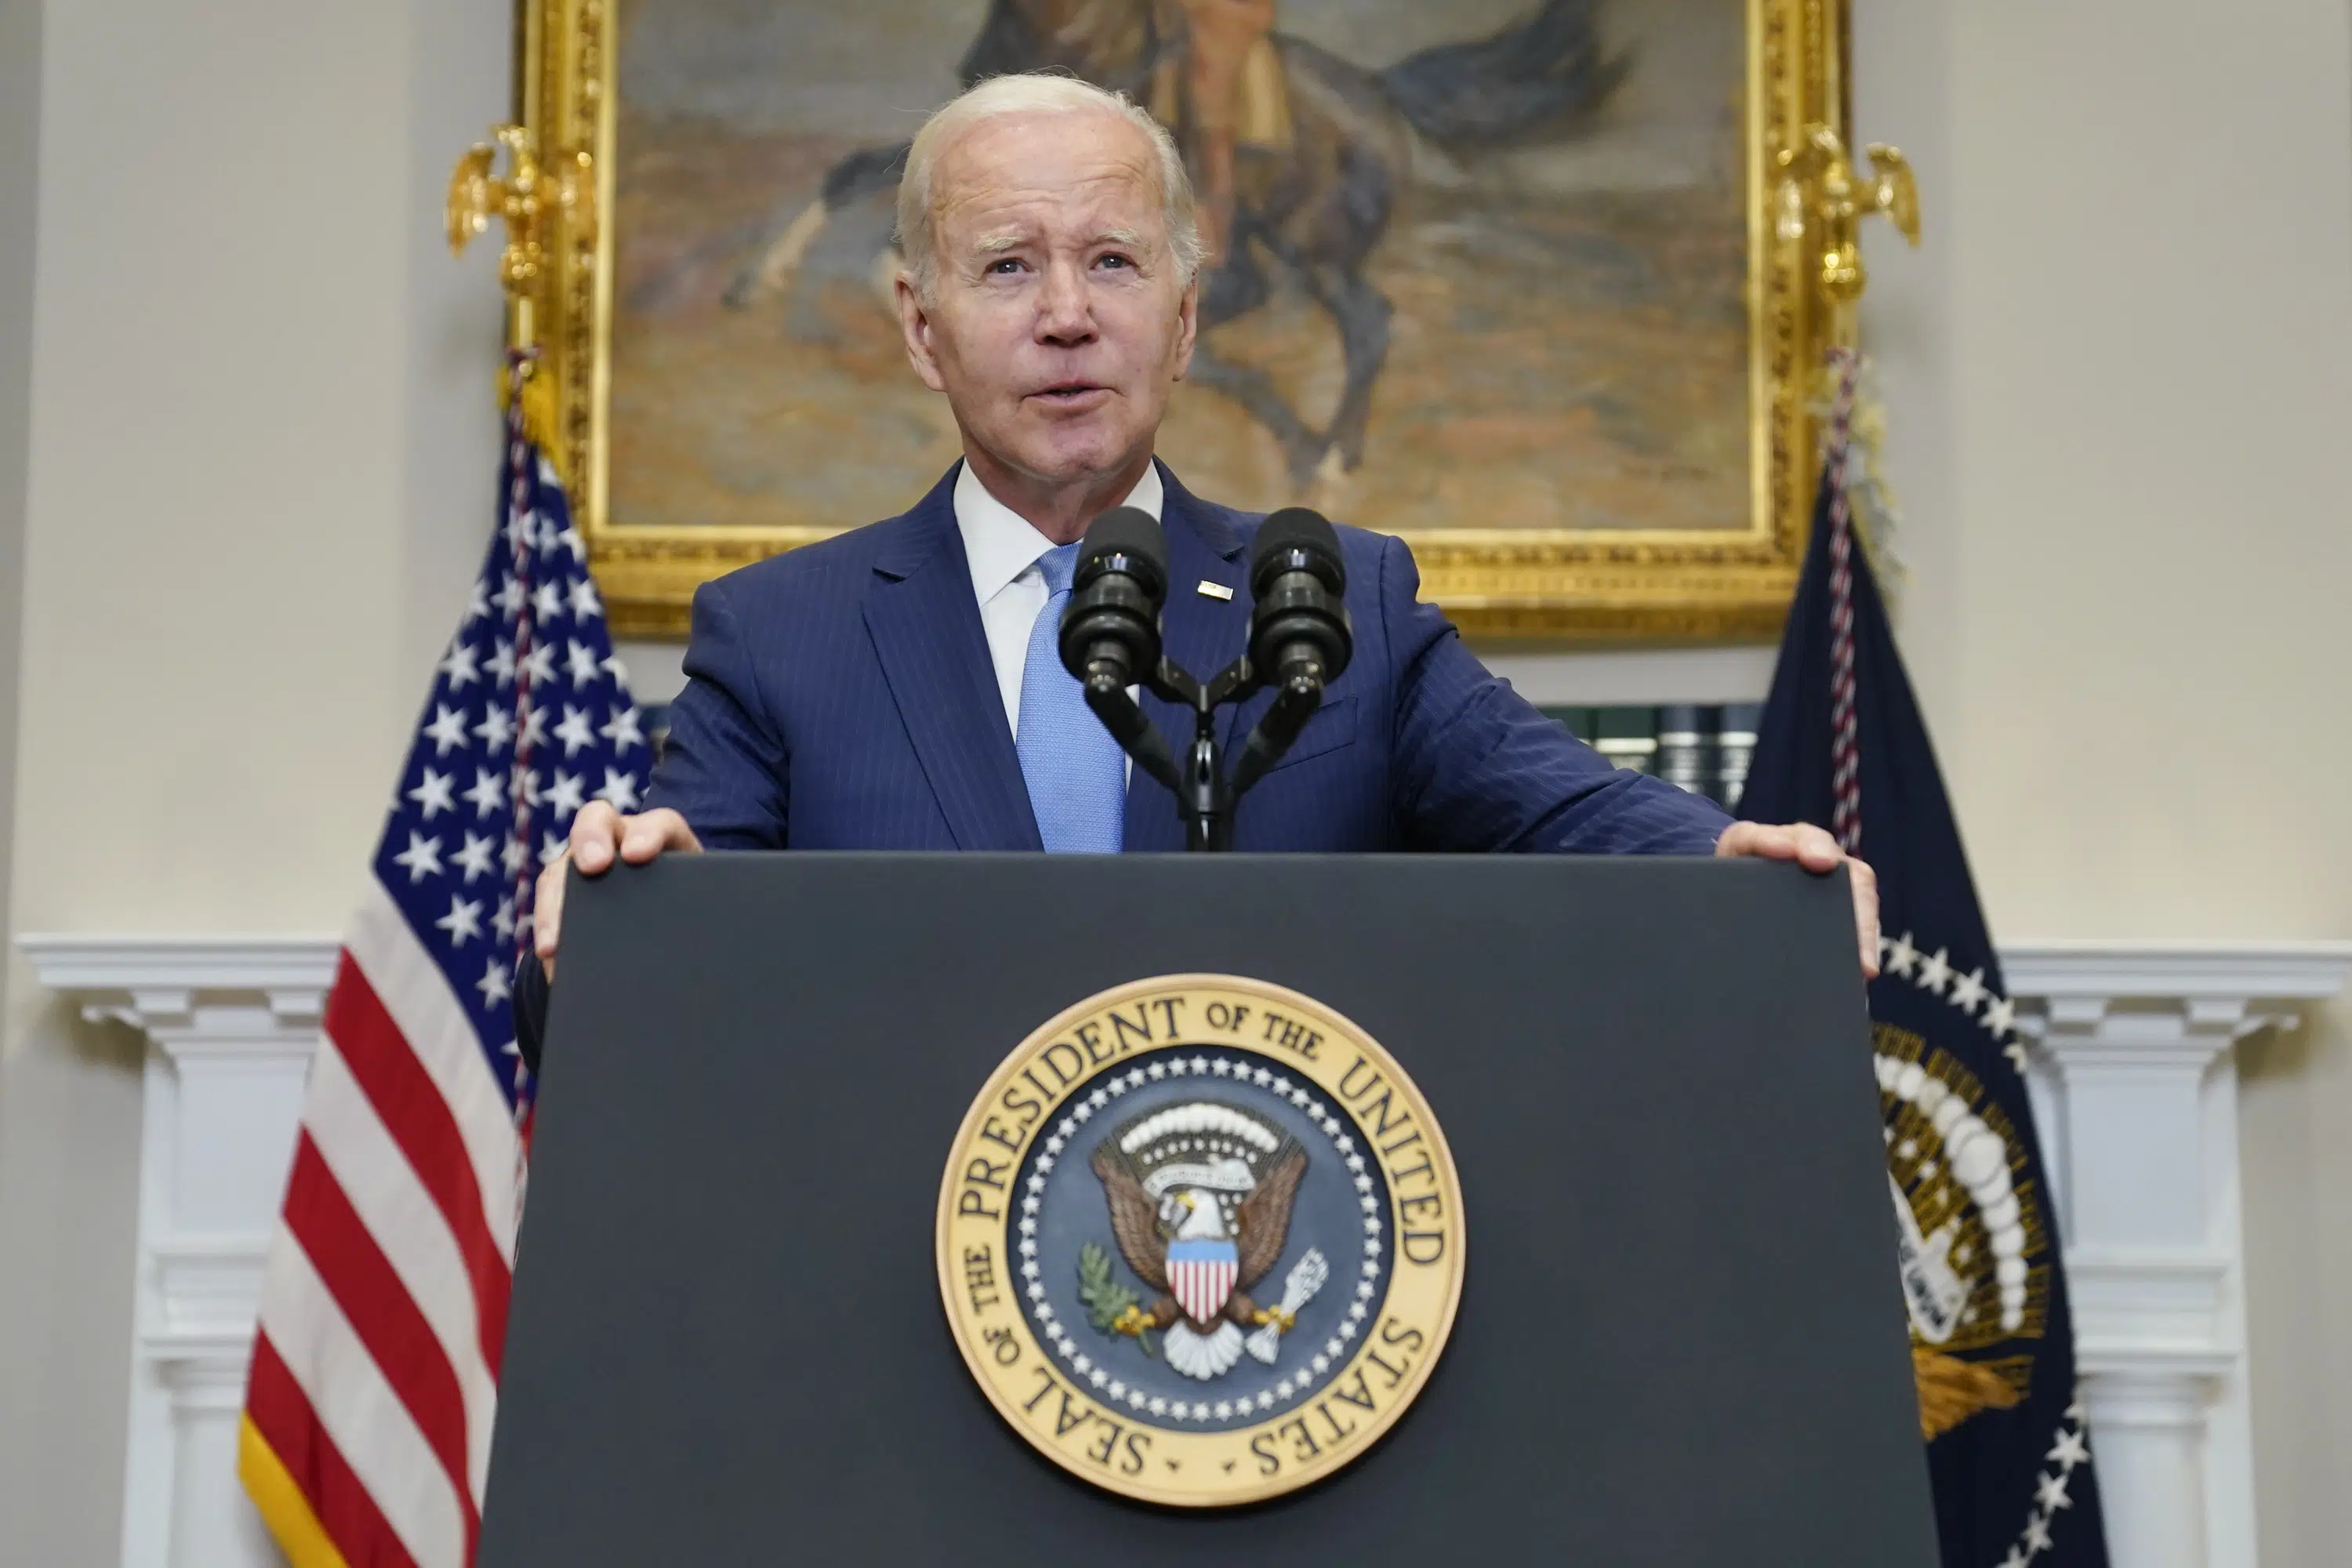 Biden declares ‘America will not default’, says he’s confident of budget deal with GOP lawmakers